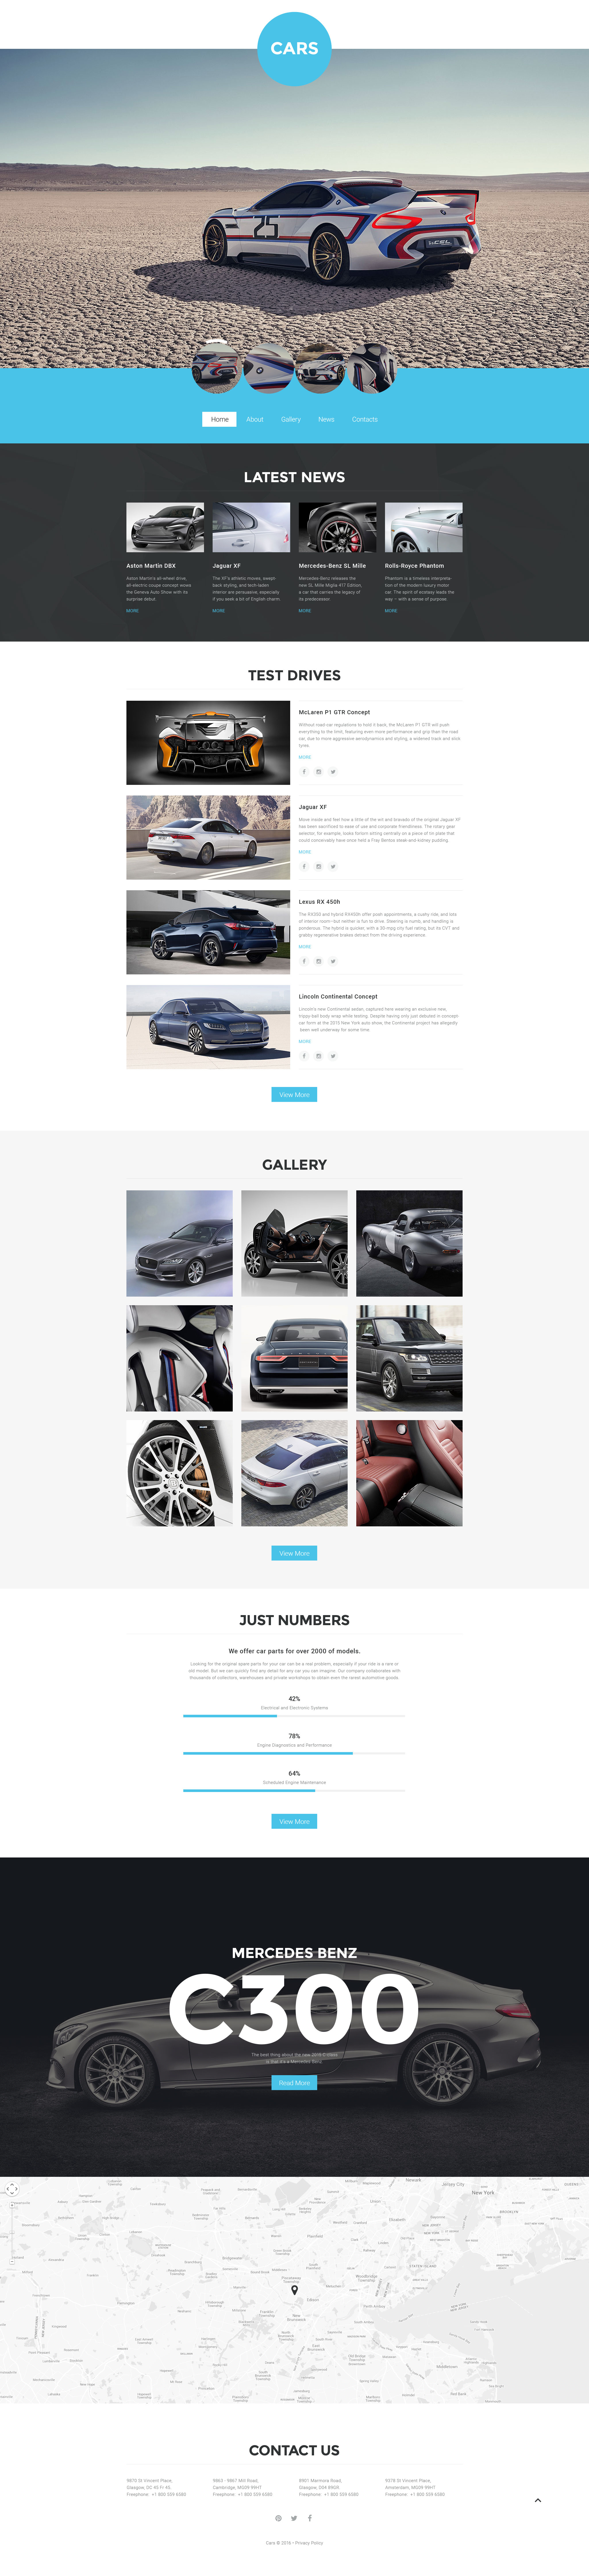 Car Club Website Template